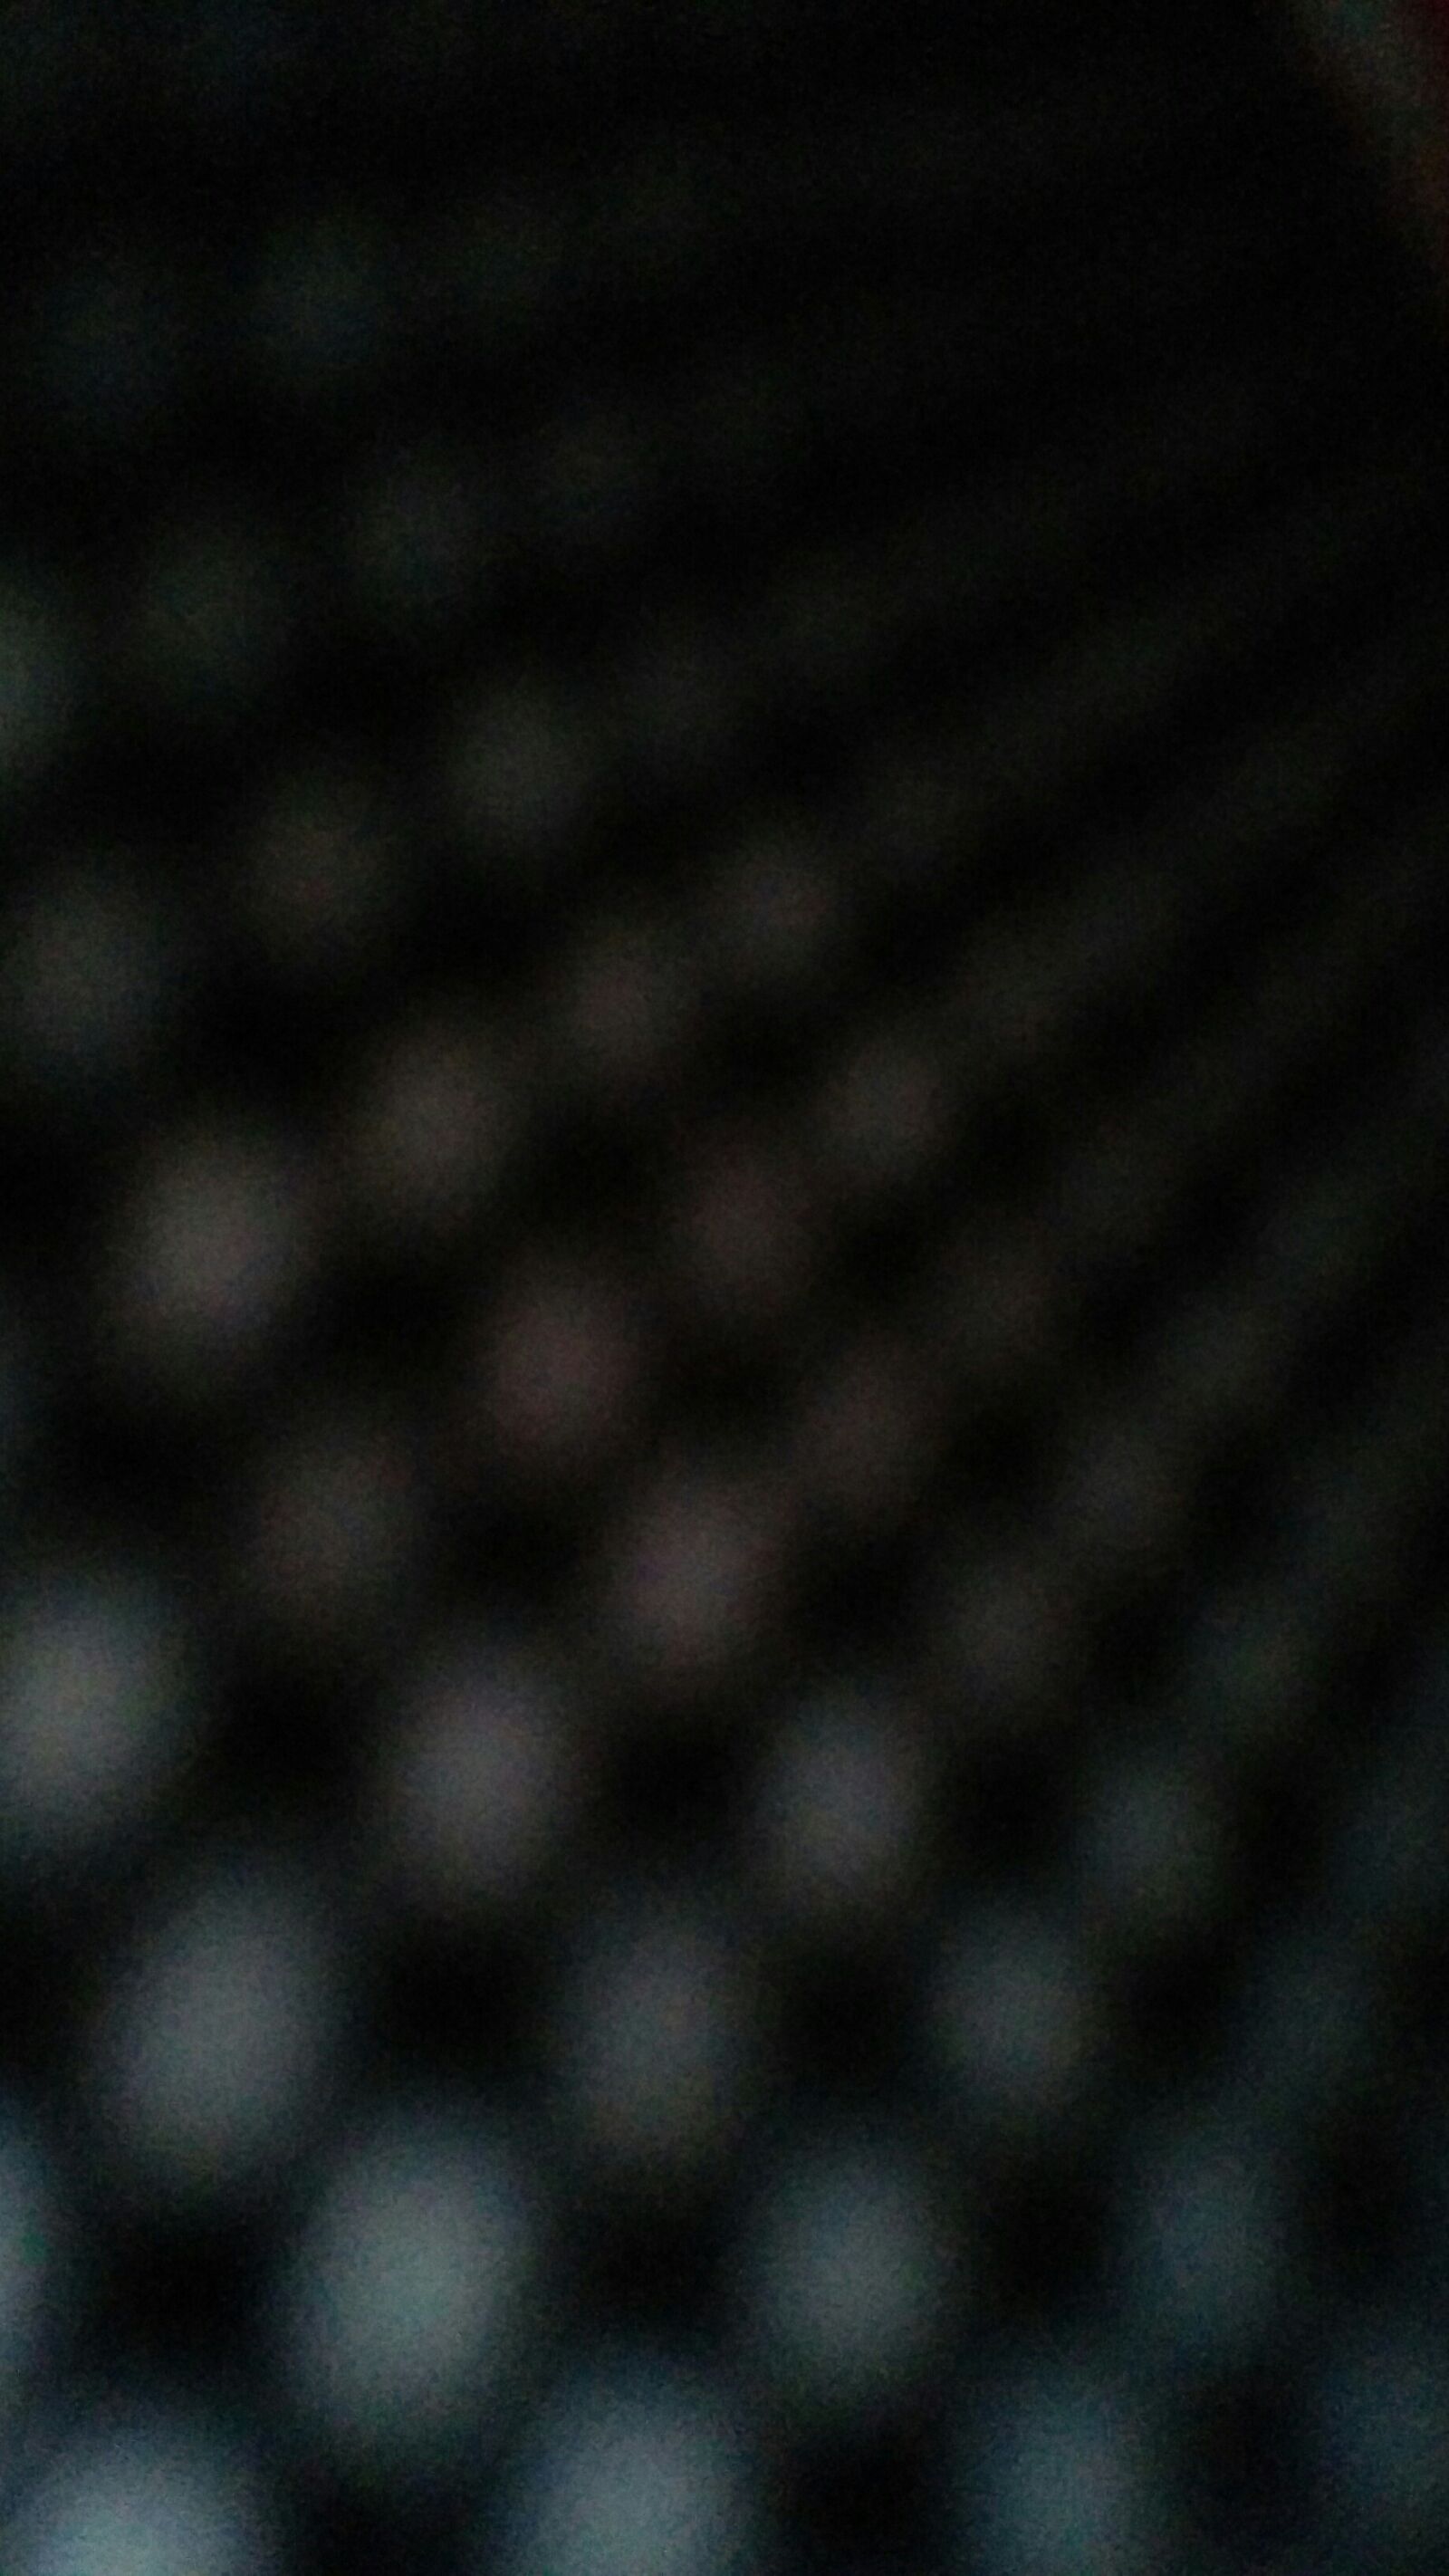 LG Nexus 5 sample photo. Black and white, monochrome photography